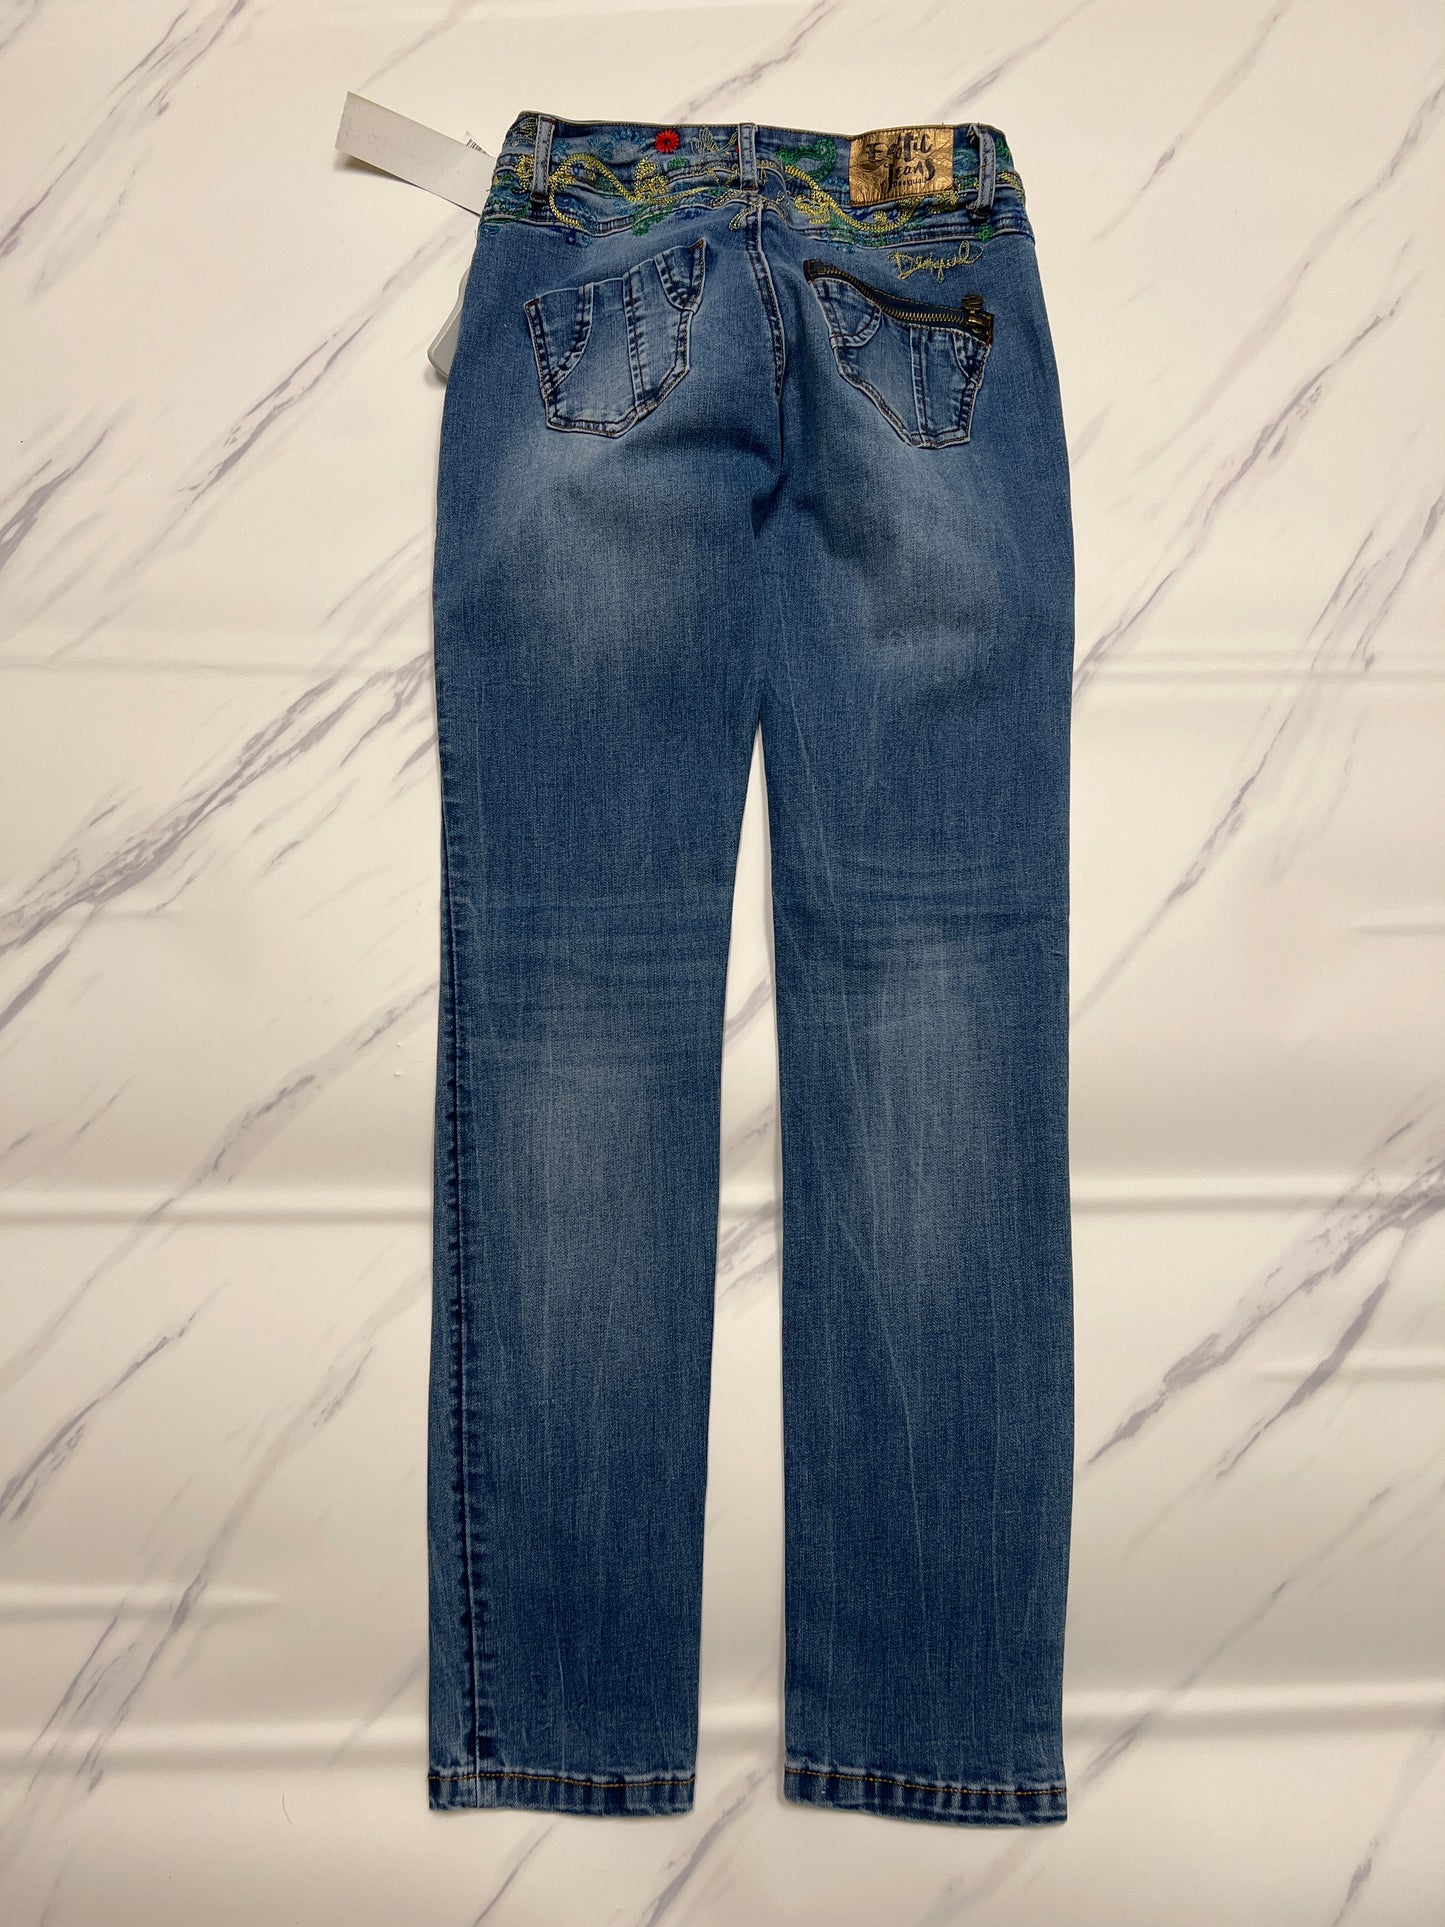 Jeans Designer By Desigual  Size: 6